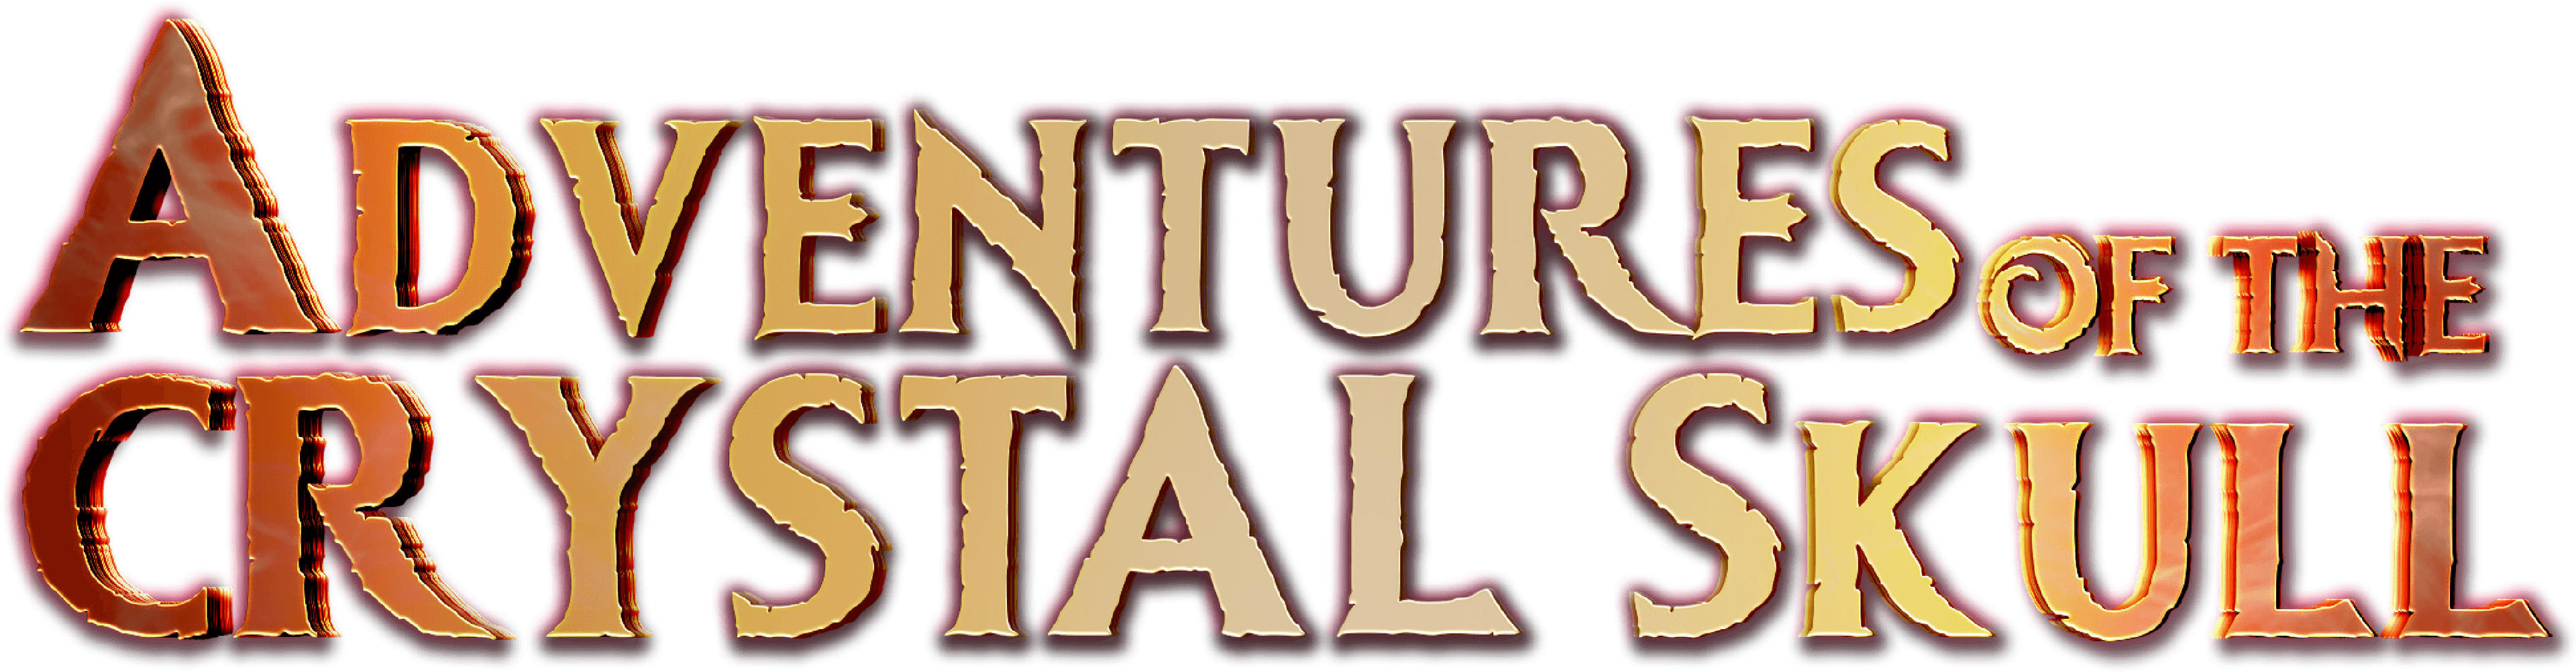 Adventures of the Crystal Skull logo